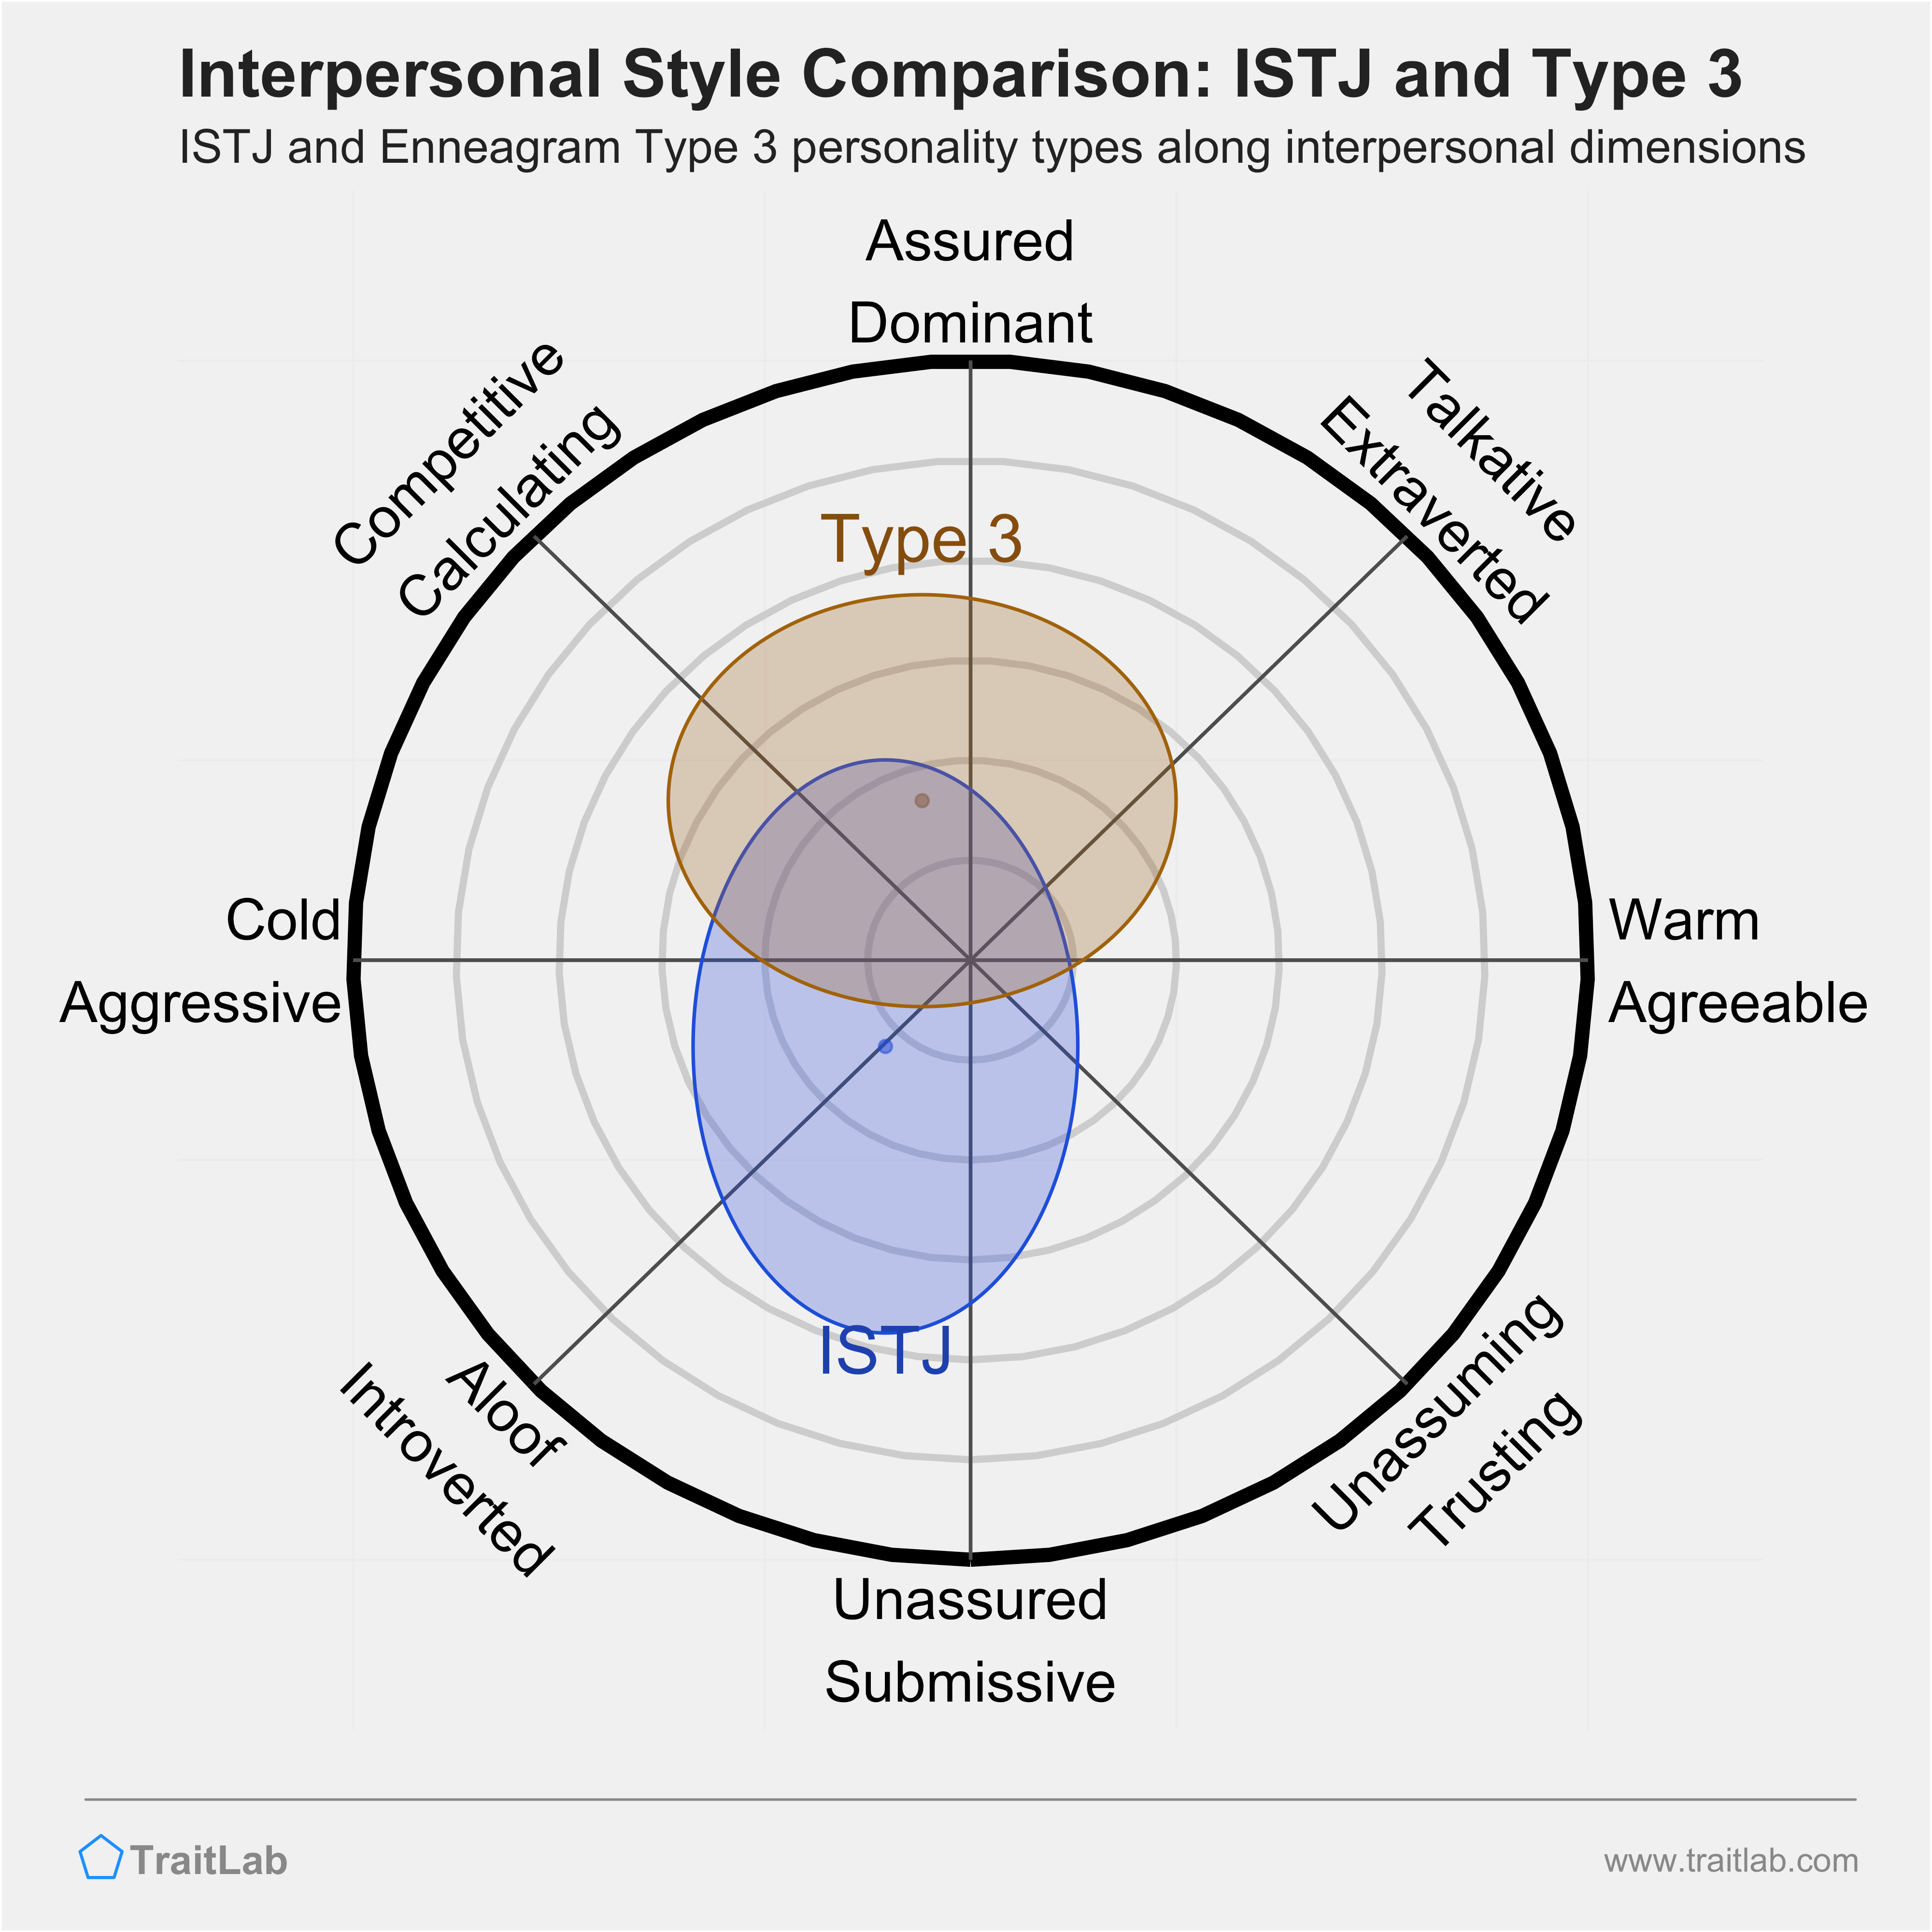 Enneagram ISTJ and Type 3 comparison across interpersonal dimensions